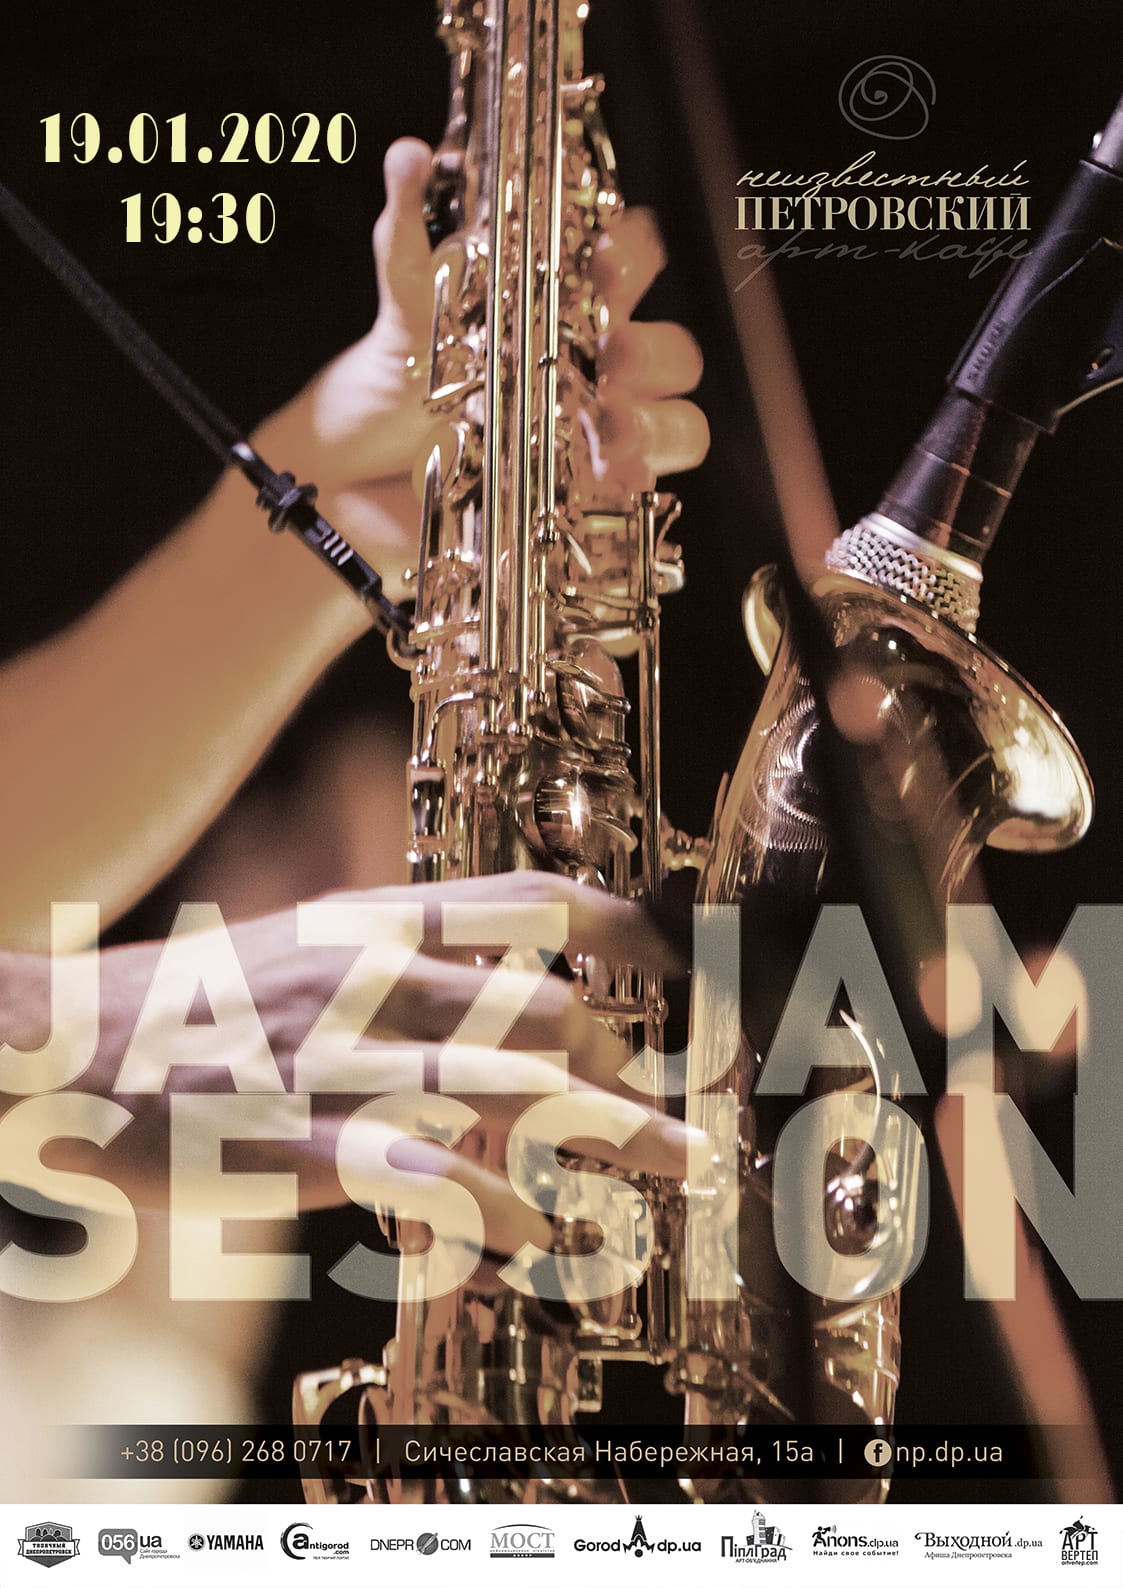 Jazz Jam Session Днепр, 19.01.2020, цена, купить билеты. Афиша Днепра